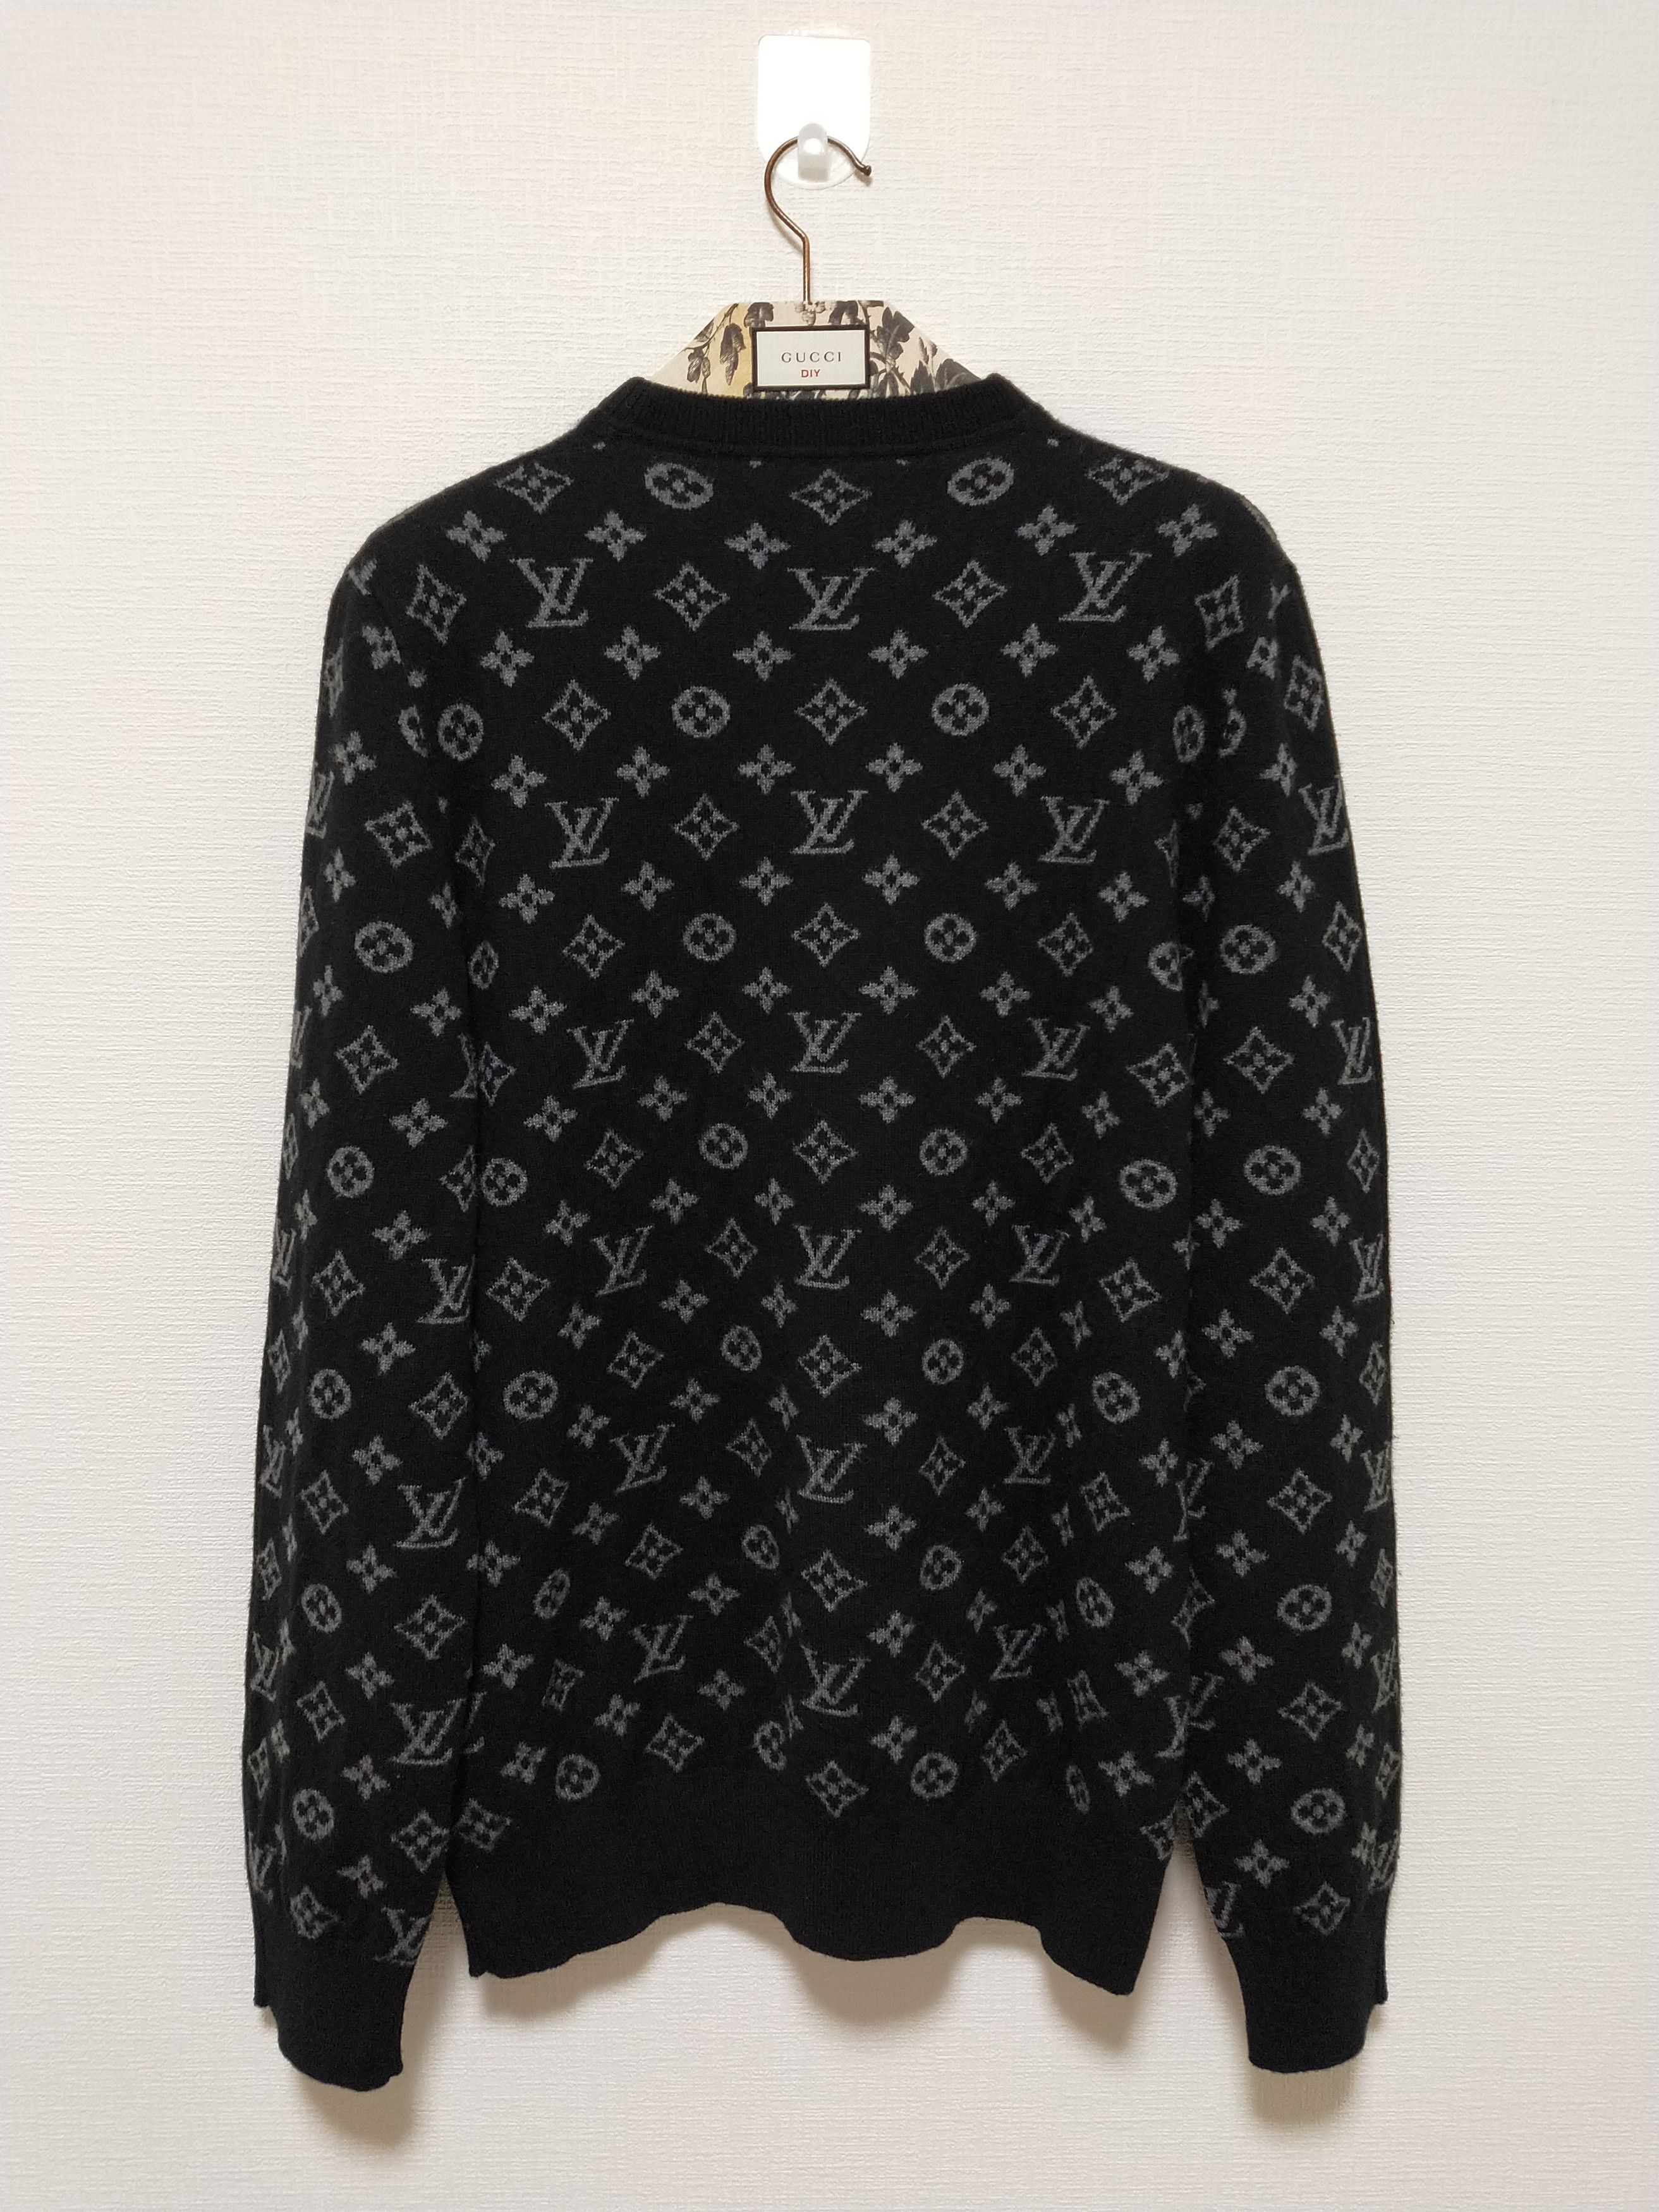 Louis Vuitton Half Monogram Cashmere Sweater | Grailed